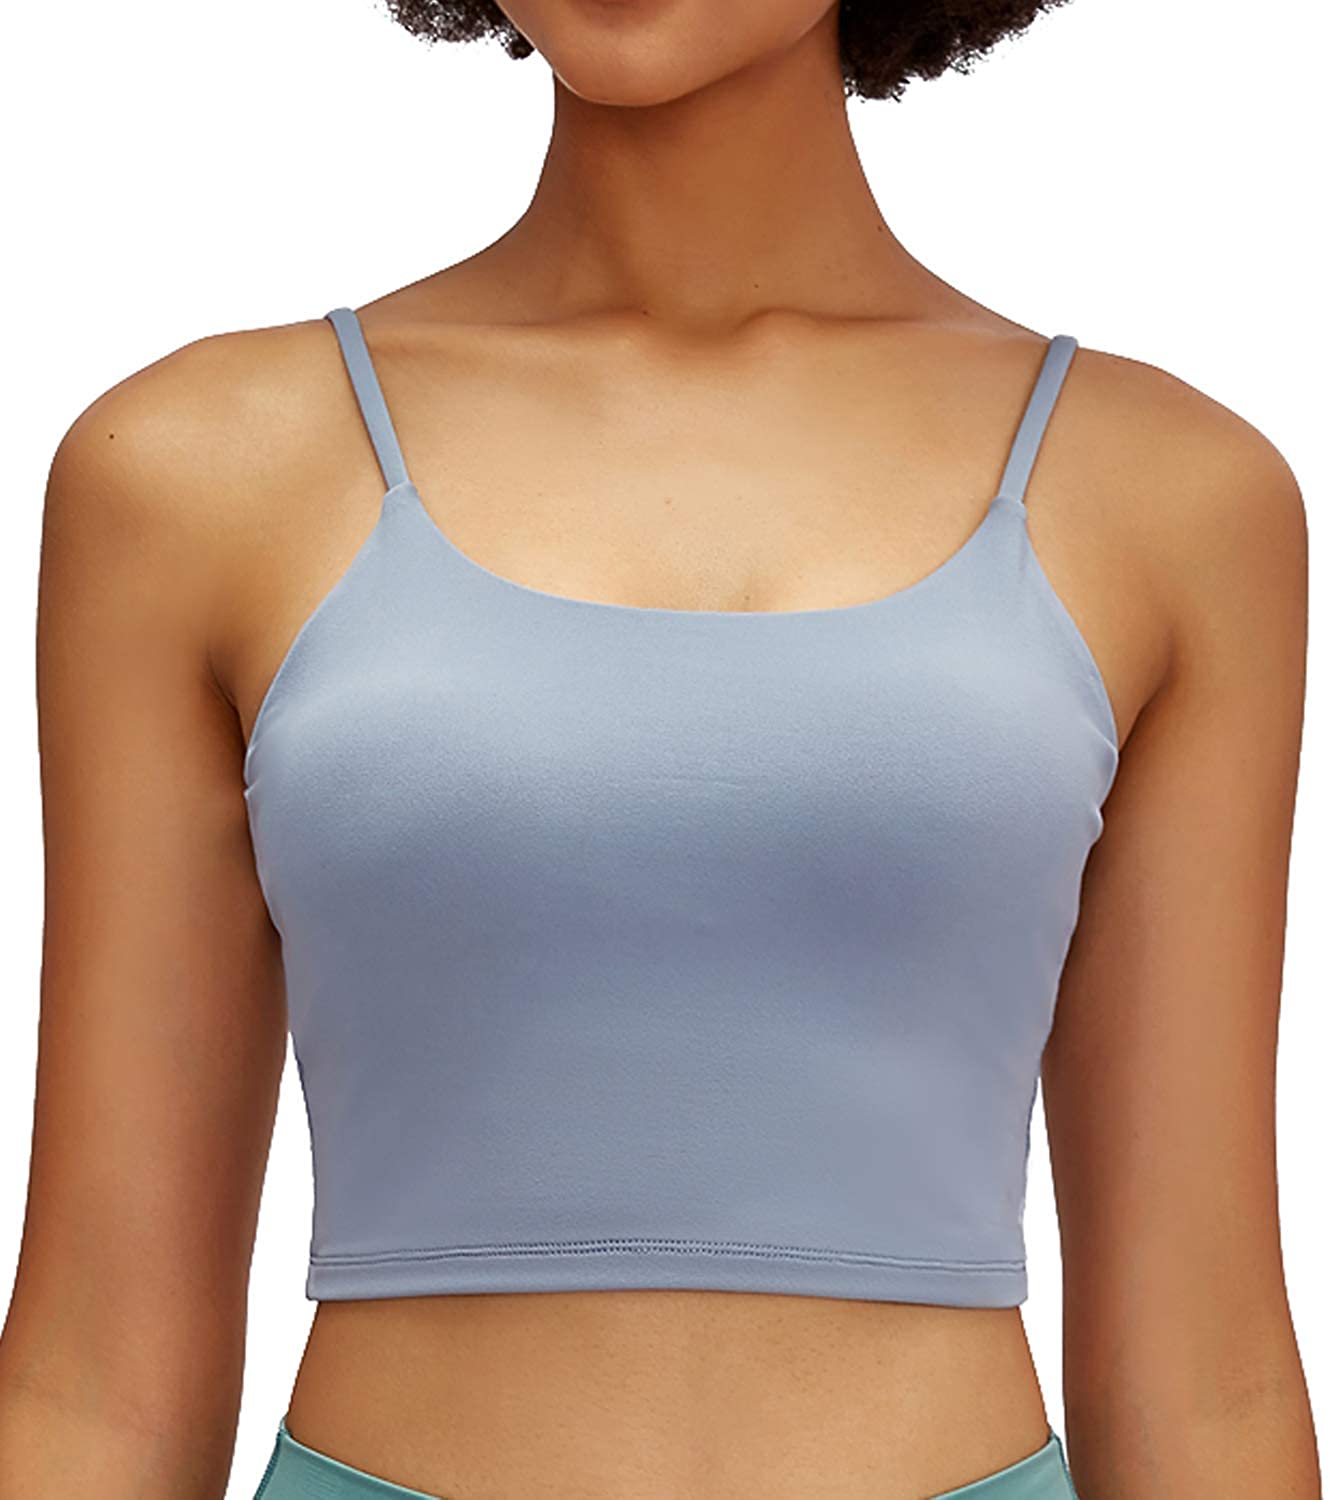 Lavento Women's Longline Sports Bra Yoga Camisole Crop Top with